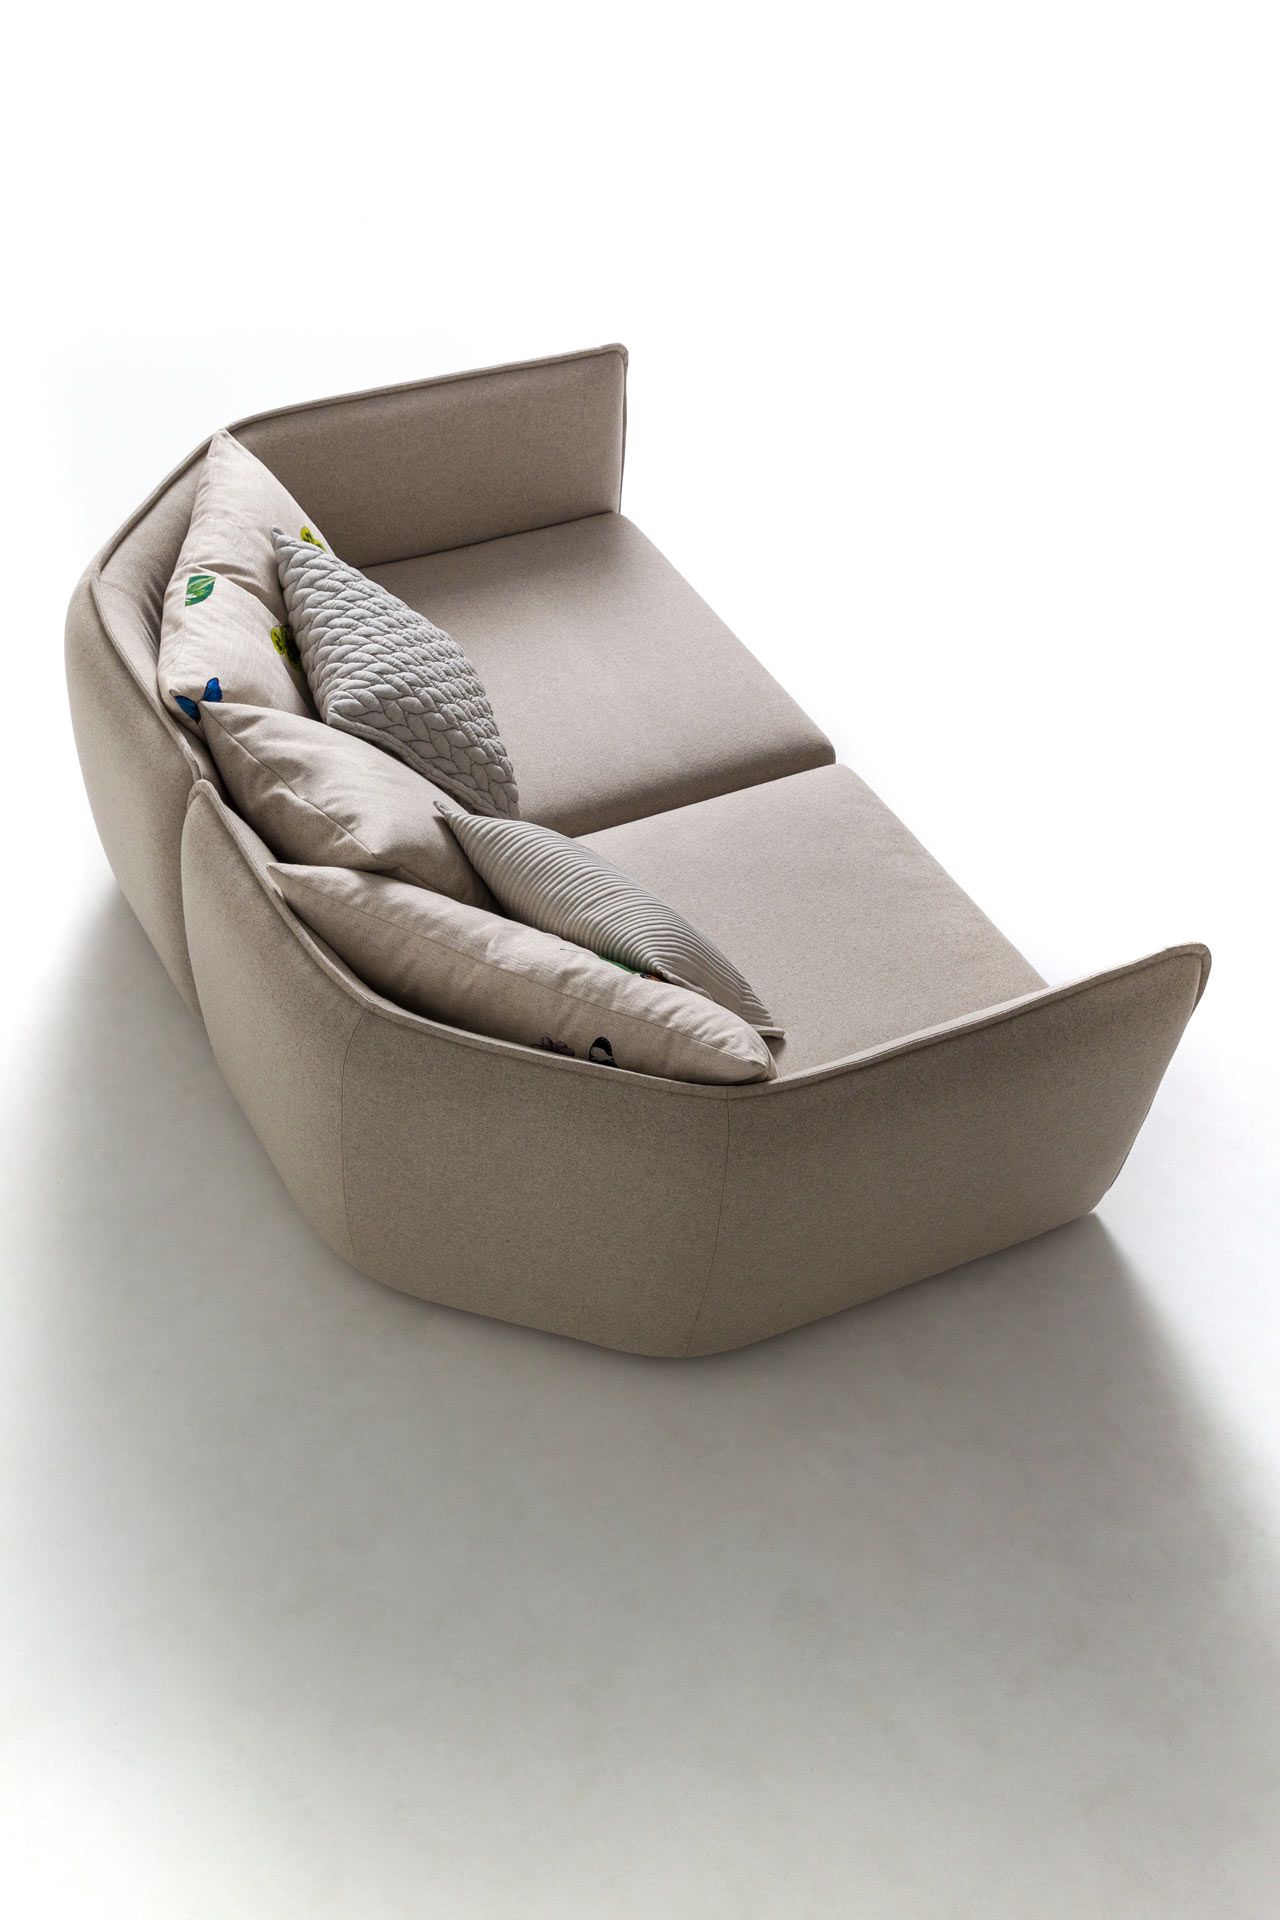 Unique Sofa Beds Design Ideas